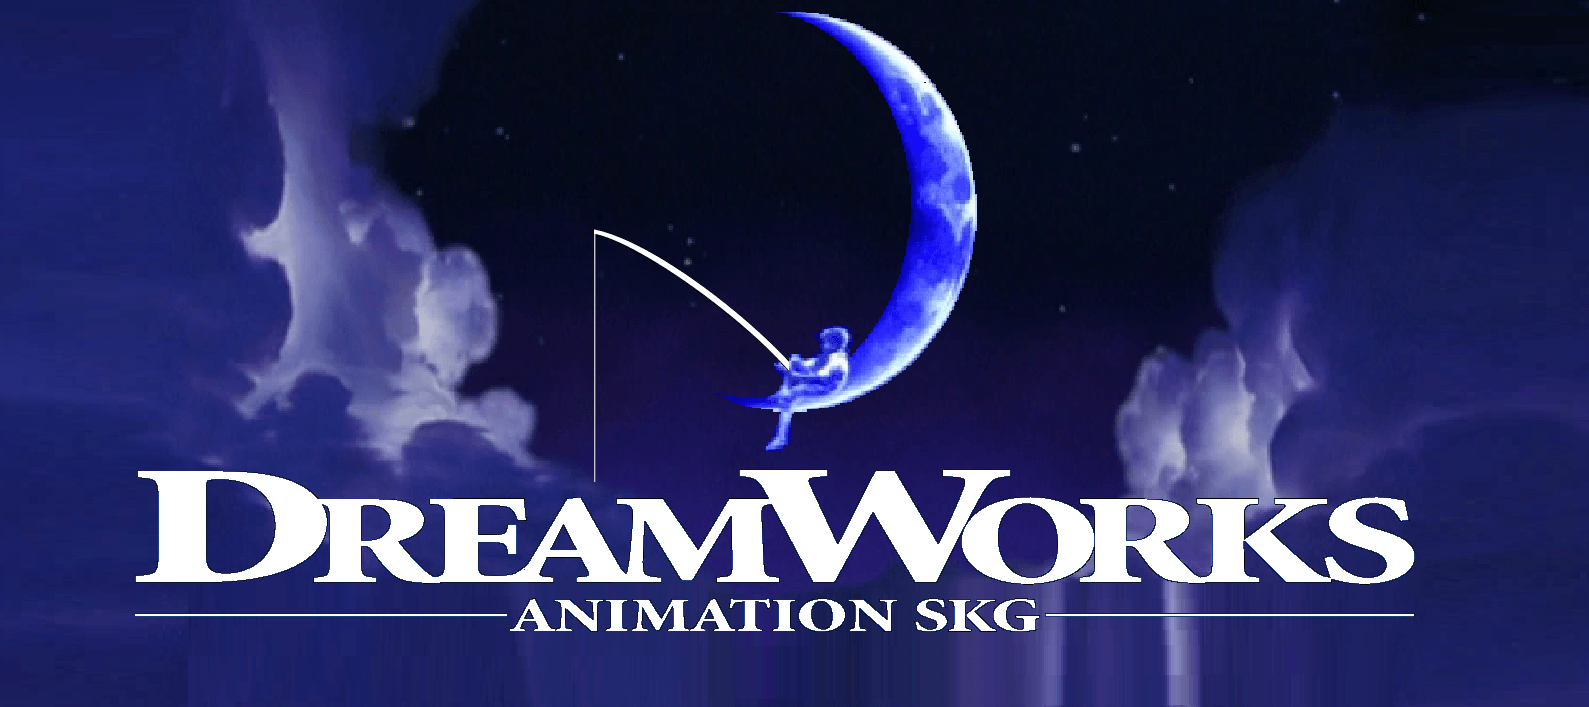 DreamWorks Movie Logo - Image - DreamWorks Animation future logo.png | The Idea Wiki ...